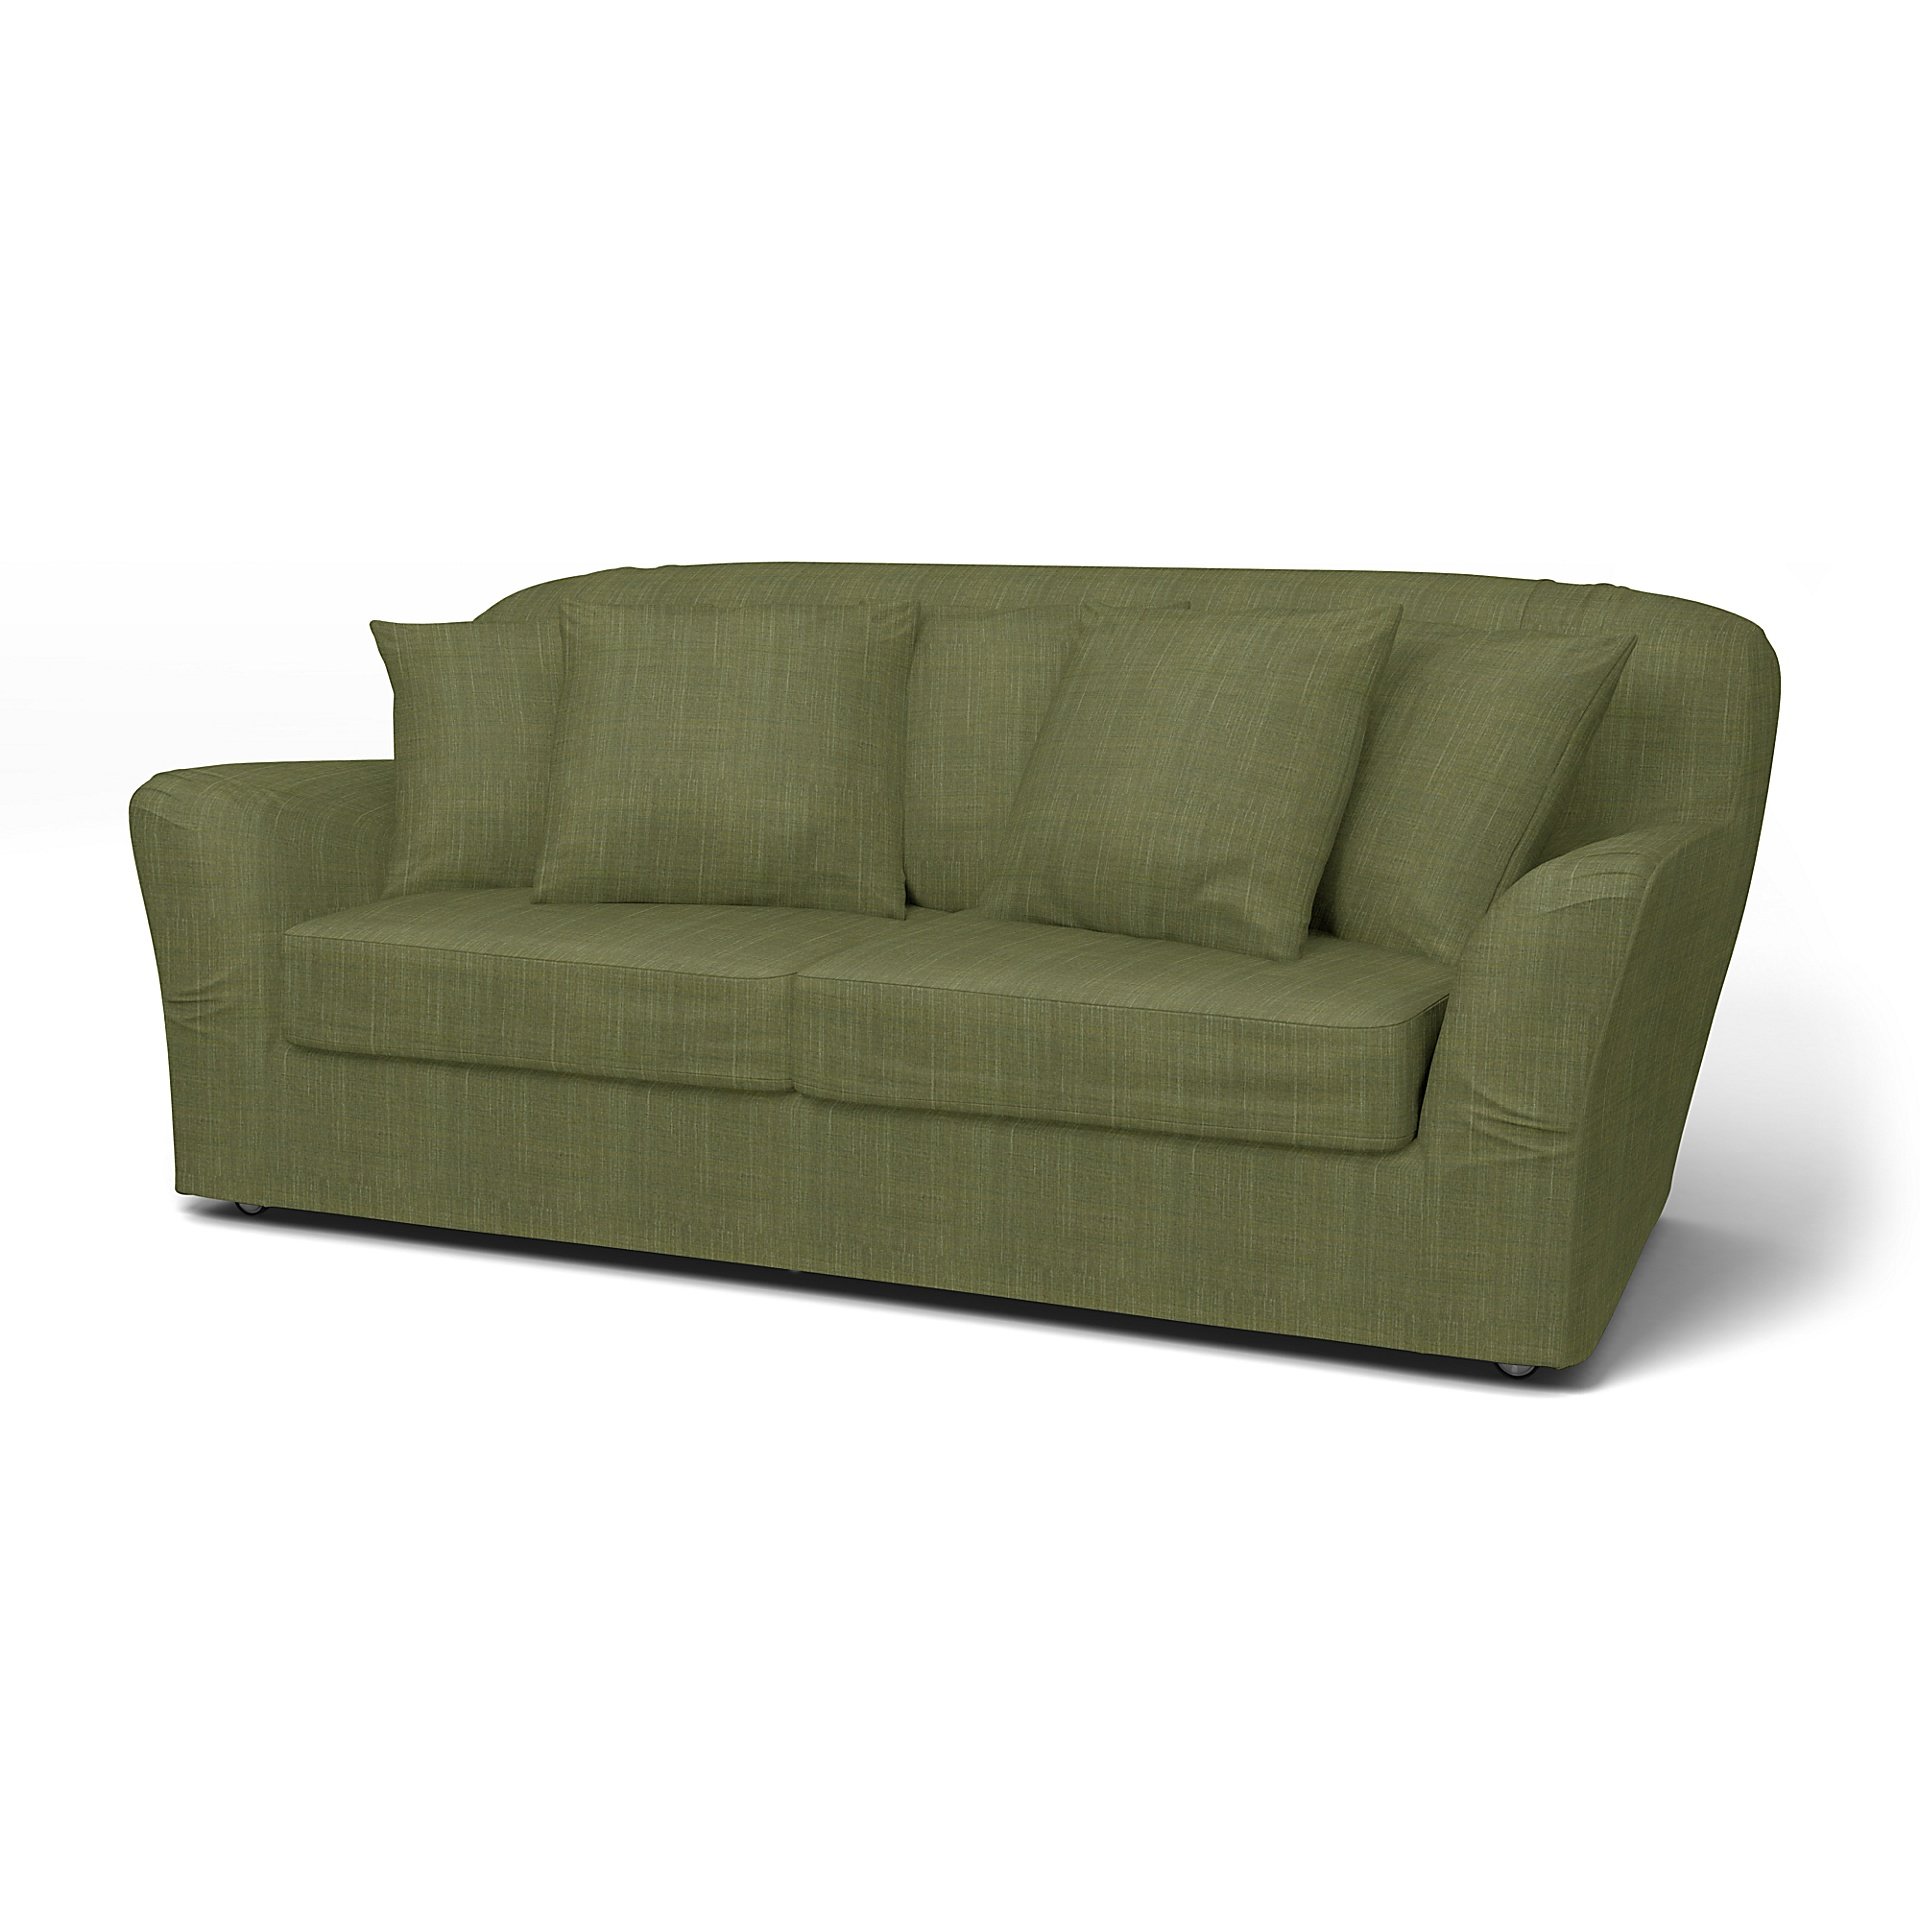 IKEA - Tomelilla sofa bed (Standard model), Moss Green, Boucle & Texture - Bemz